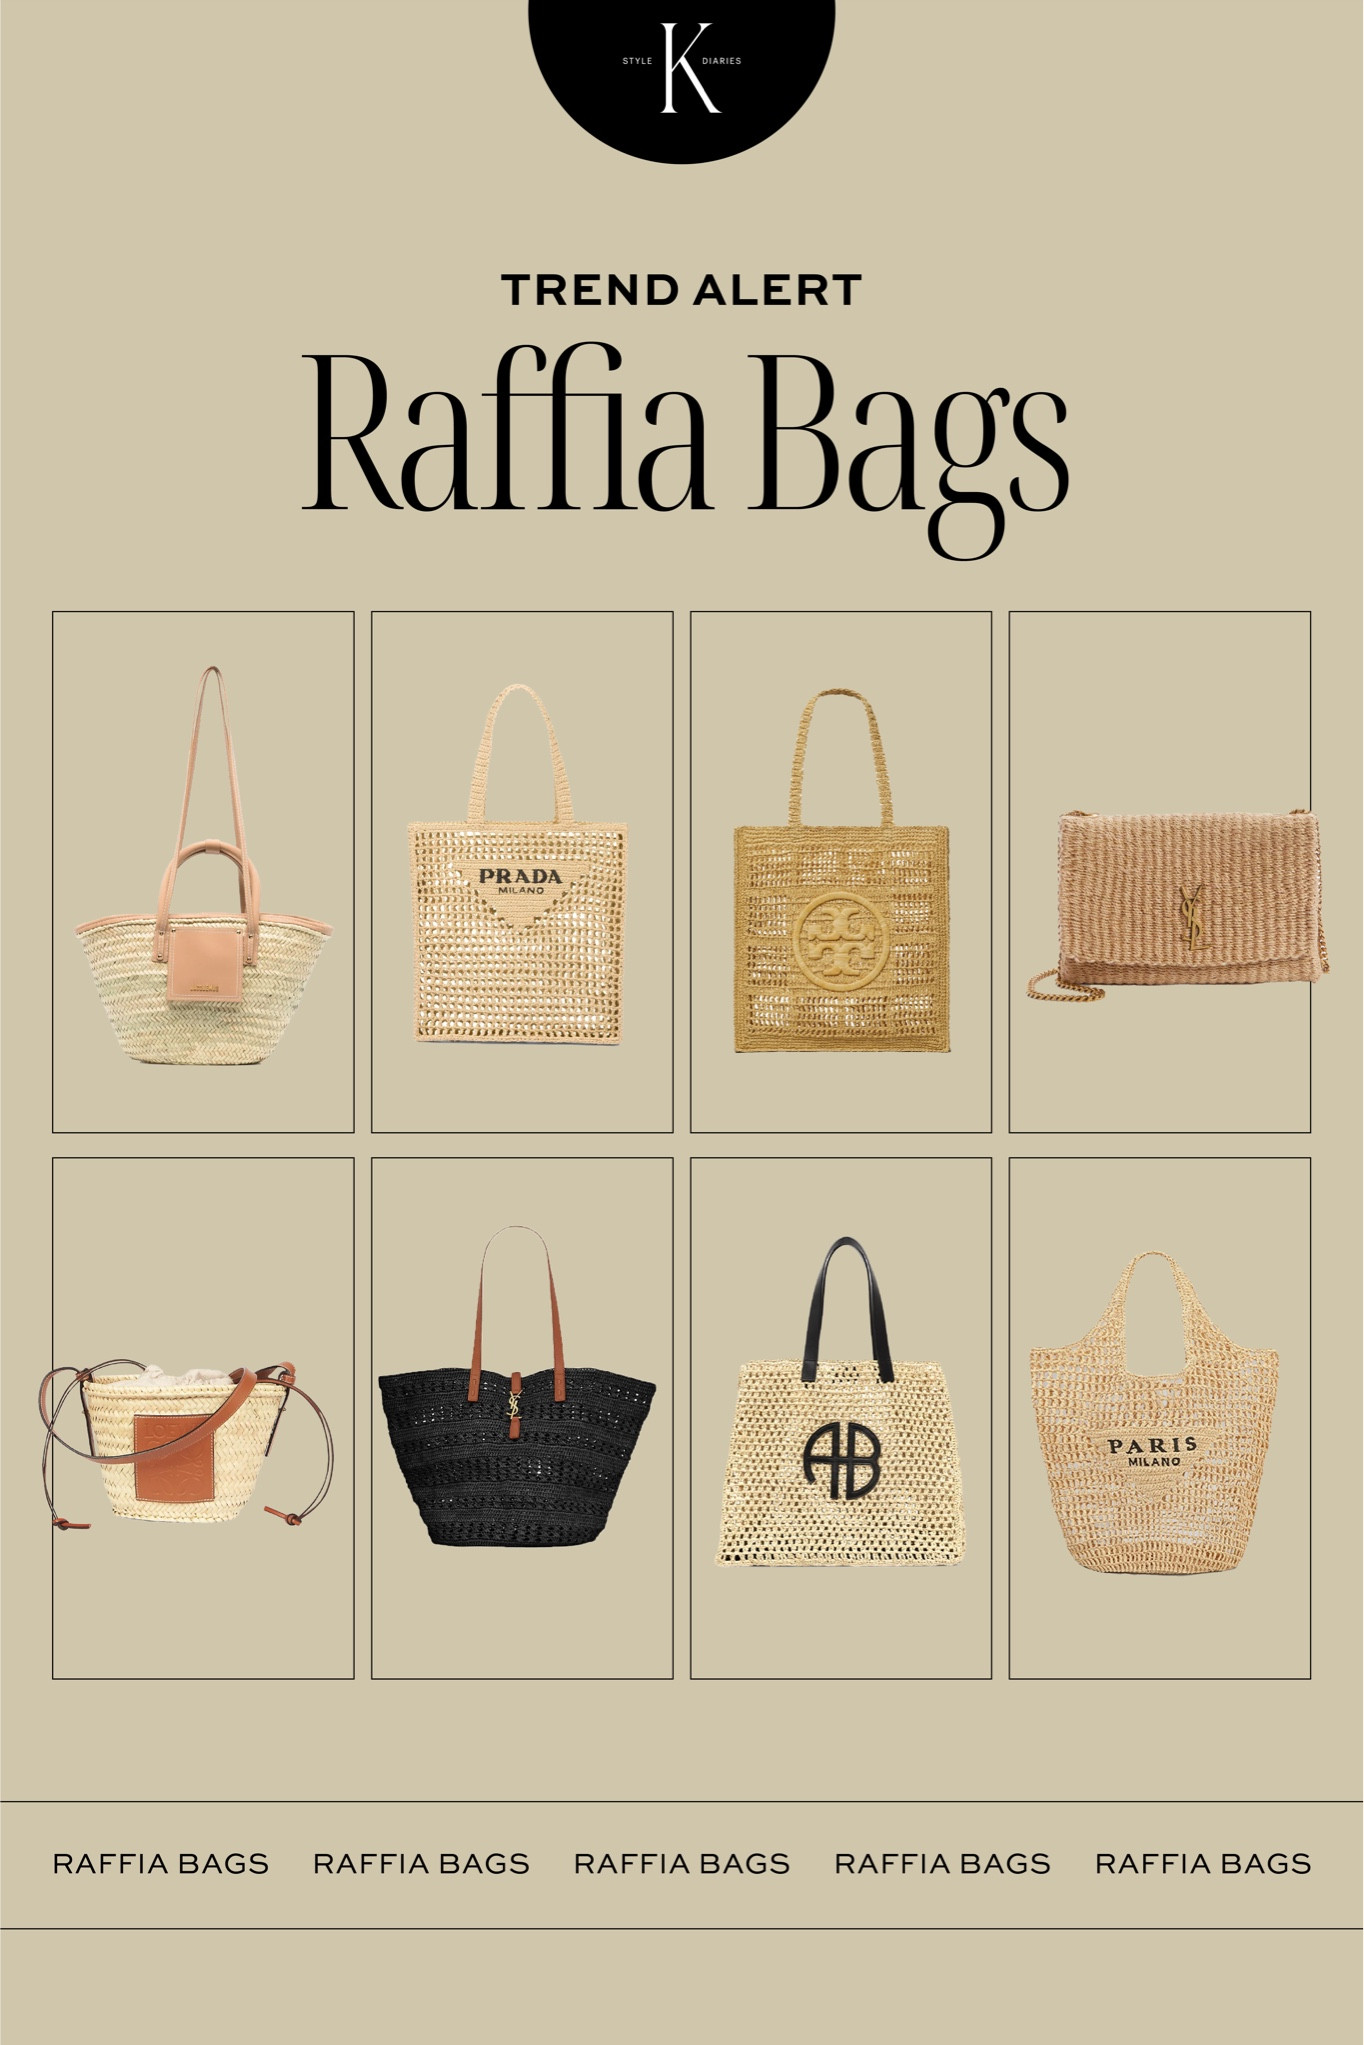 Raffia tote bag curated on LTK